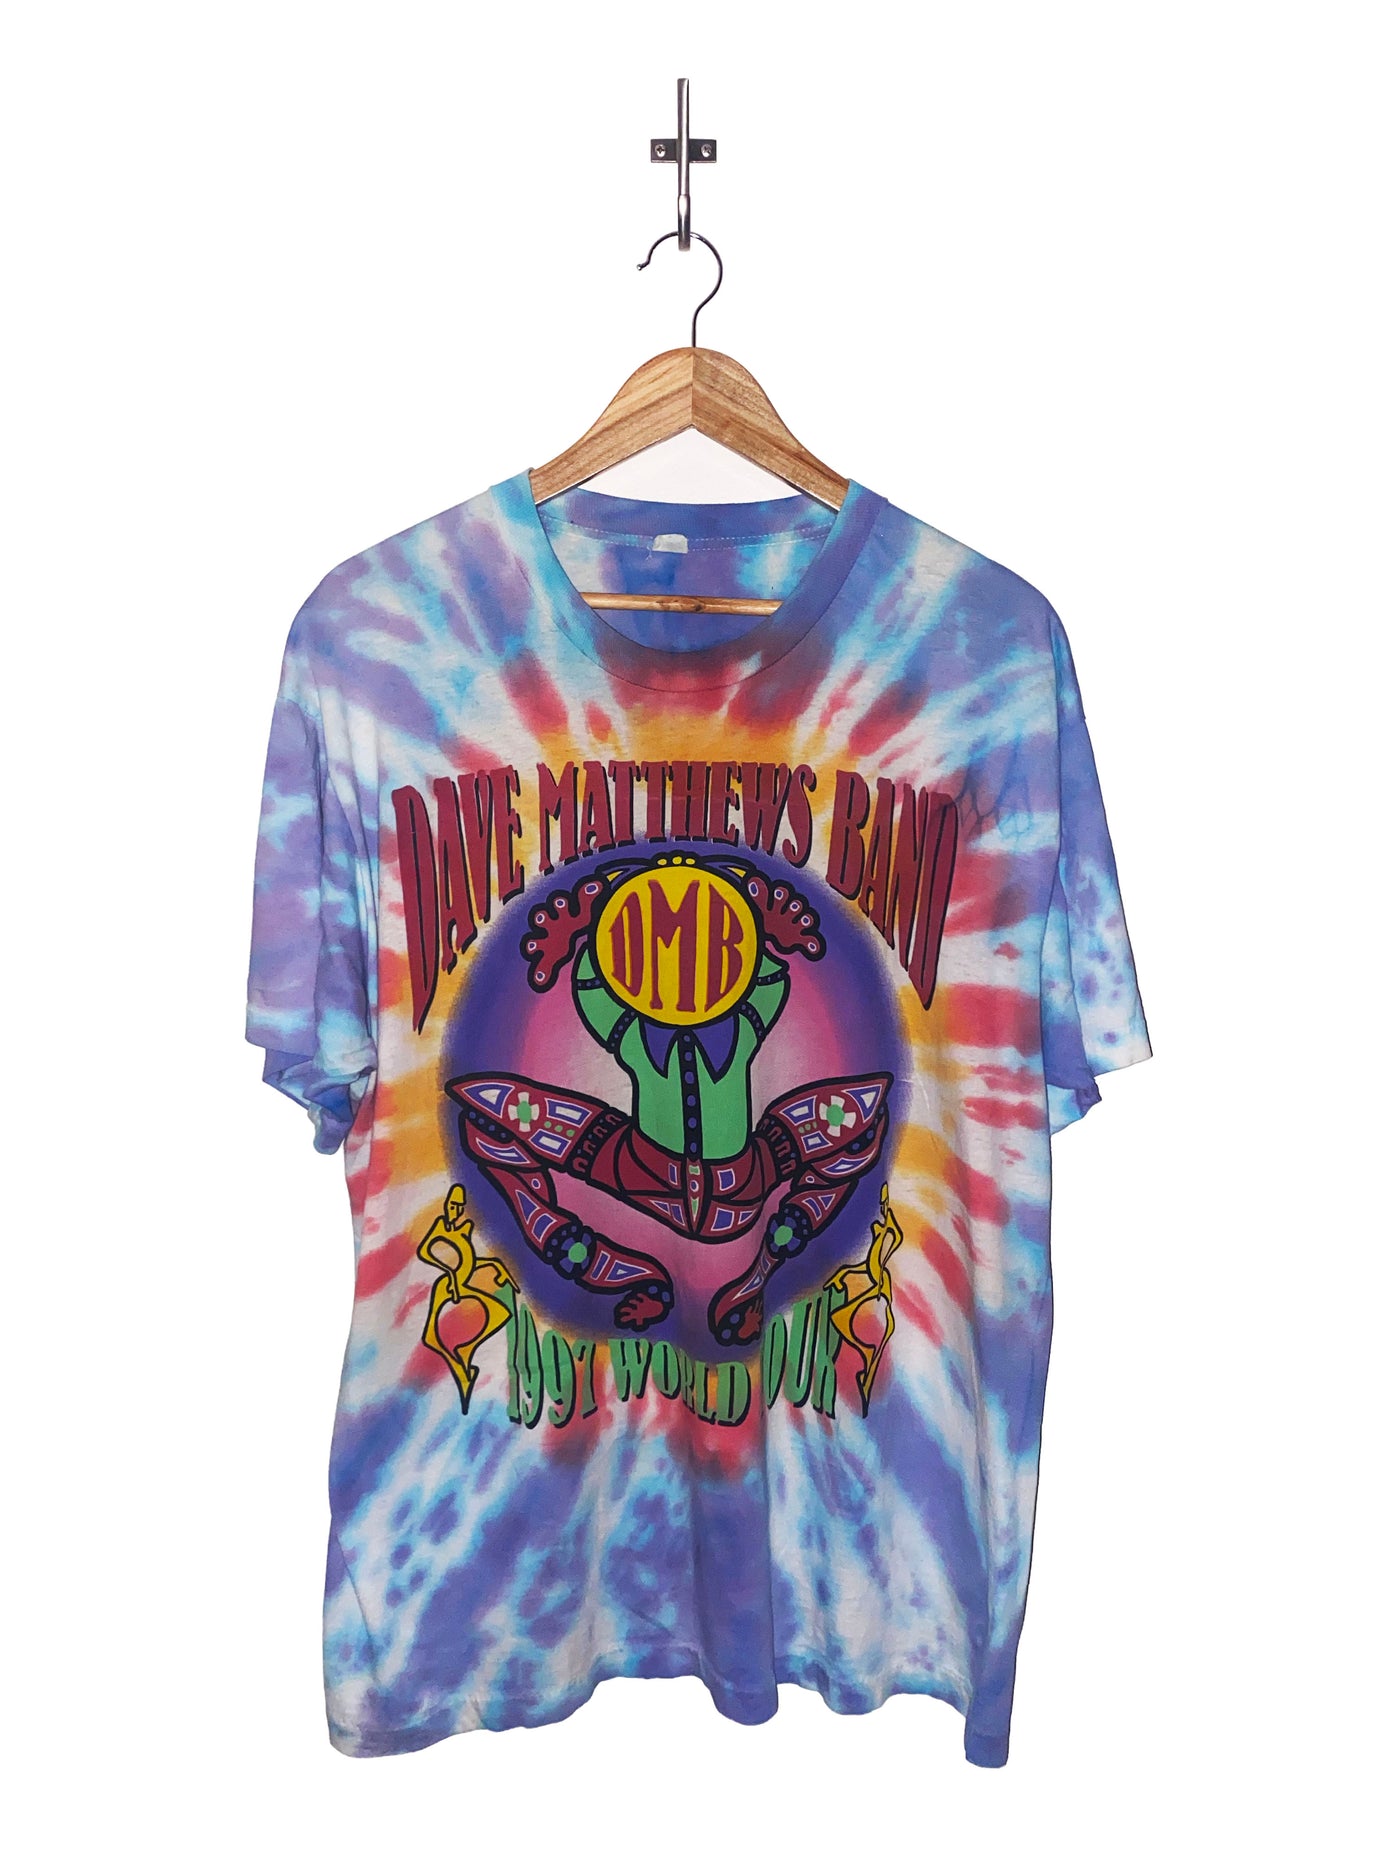 Vintage 1997 Dave Matthews Band World Tour T-Shirt